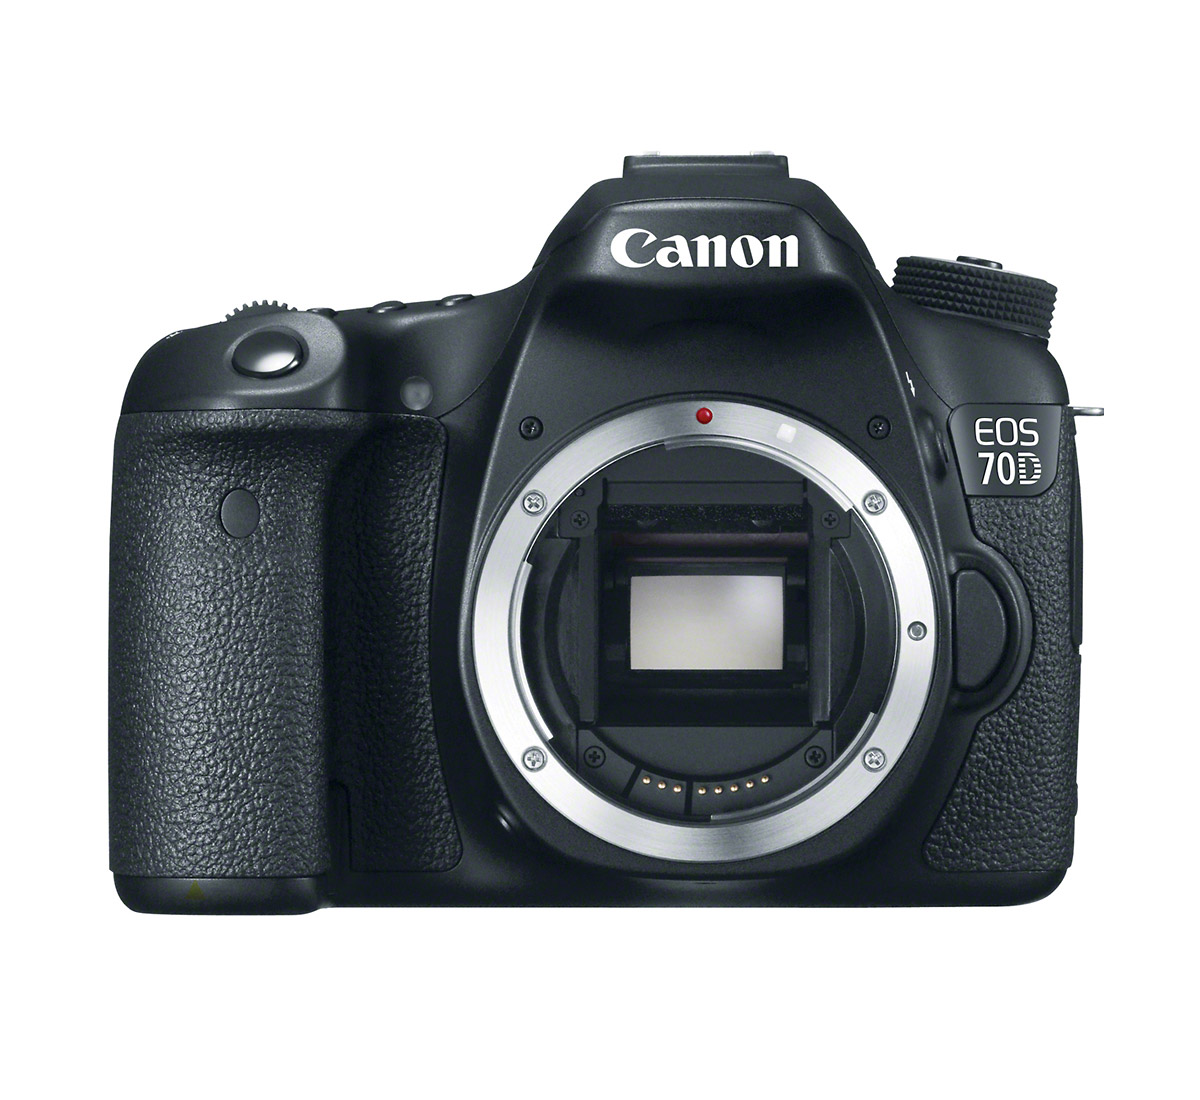 Canon EOS 70D With New 20.2-MP APS-C CMOS Sensor